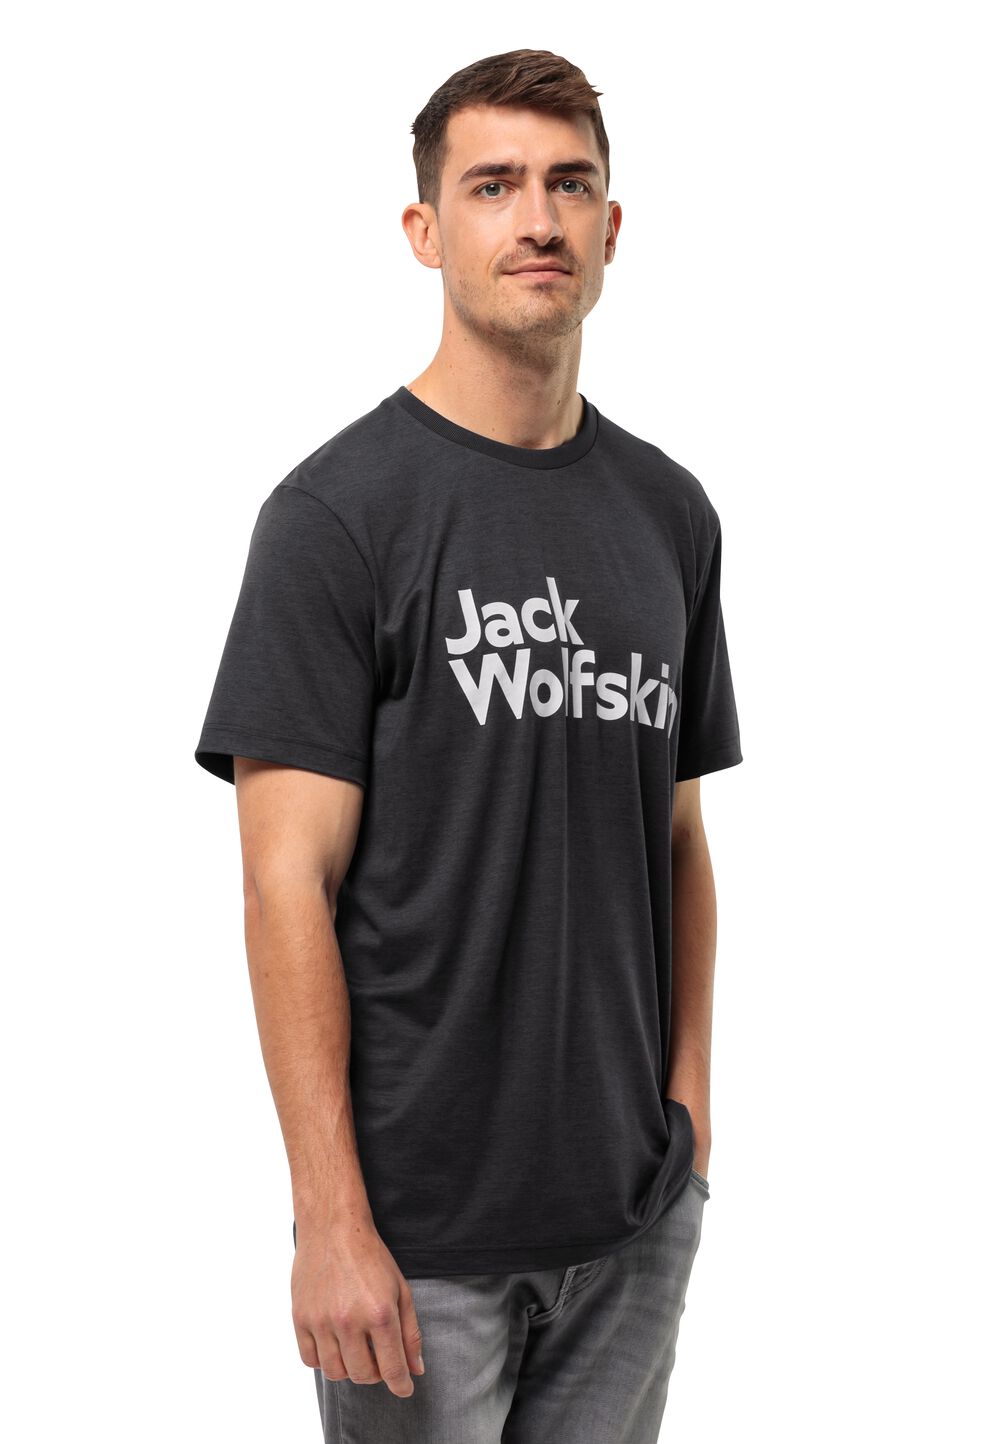 Jack Wolfskin Brand T-Shirt Men Functioneel shirt Heren XL zwart black